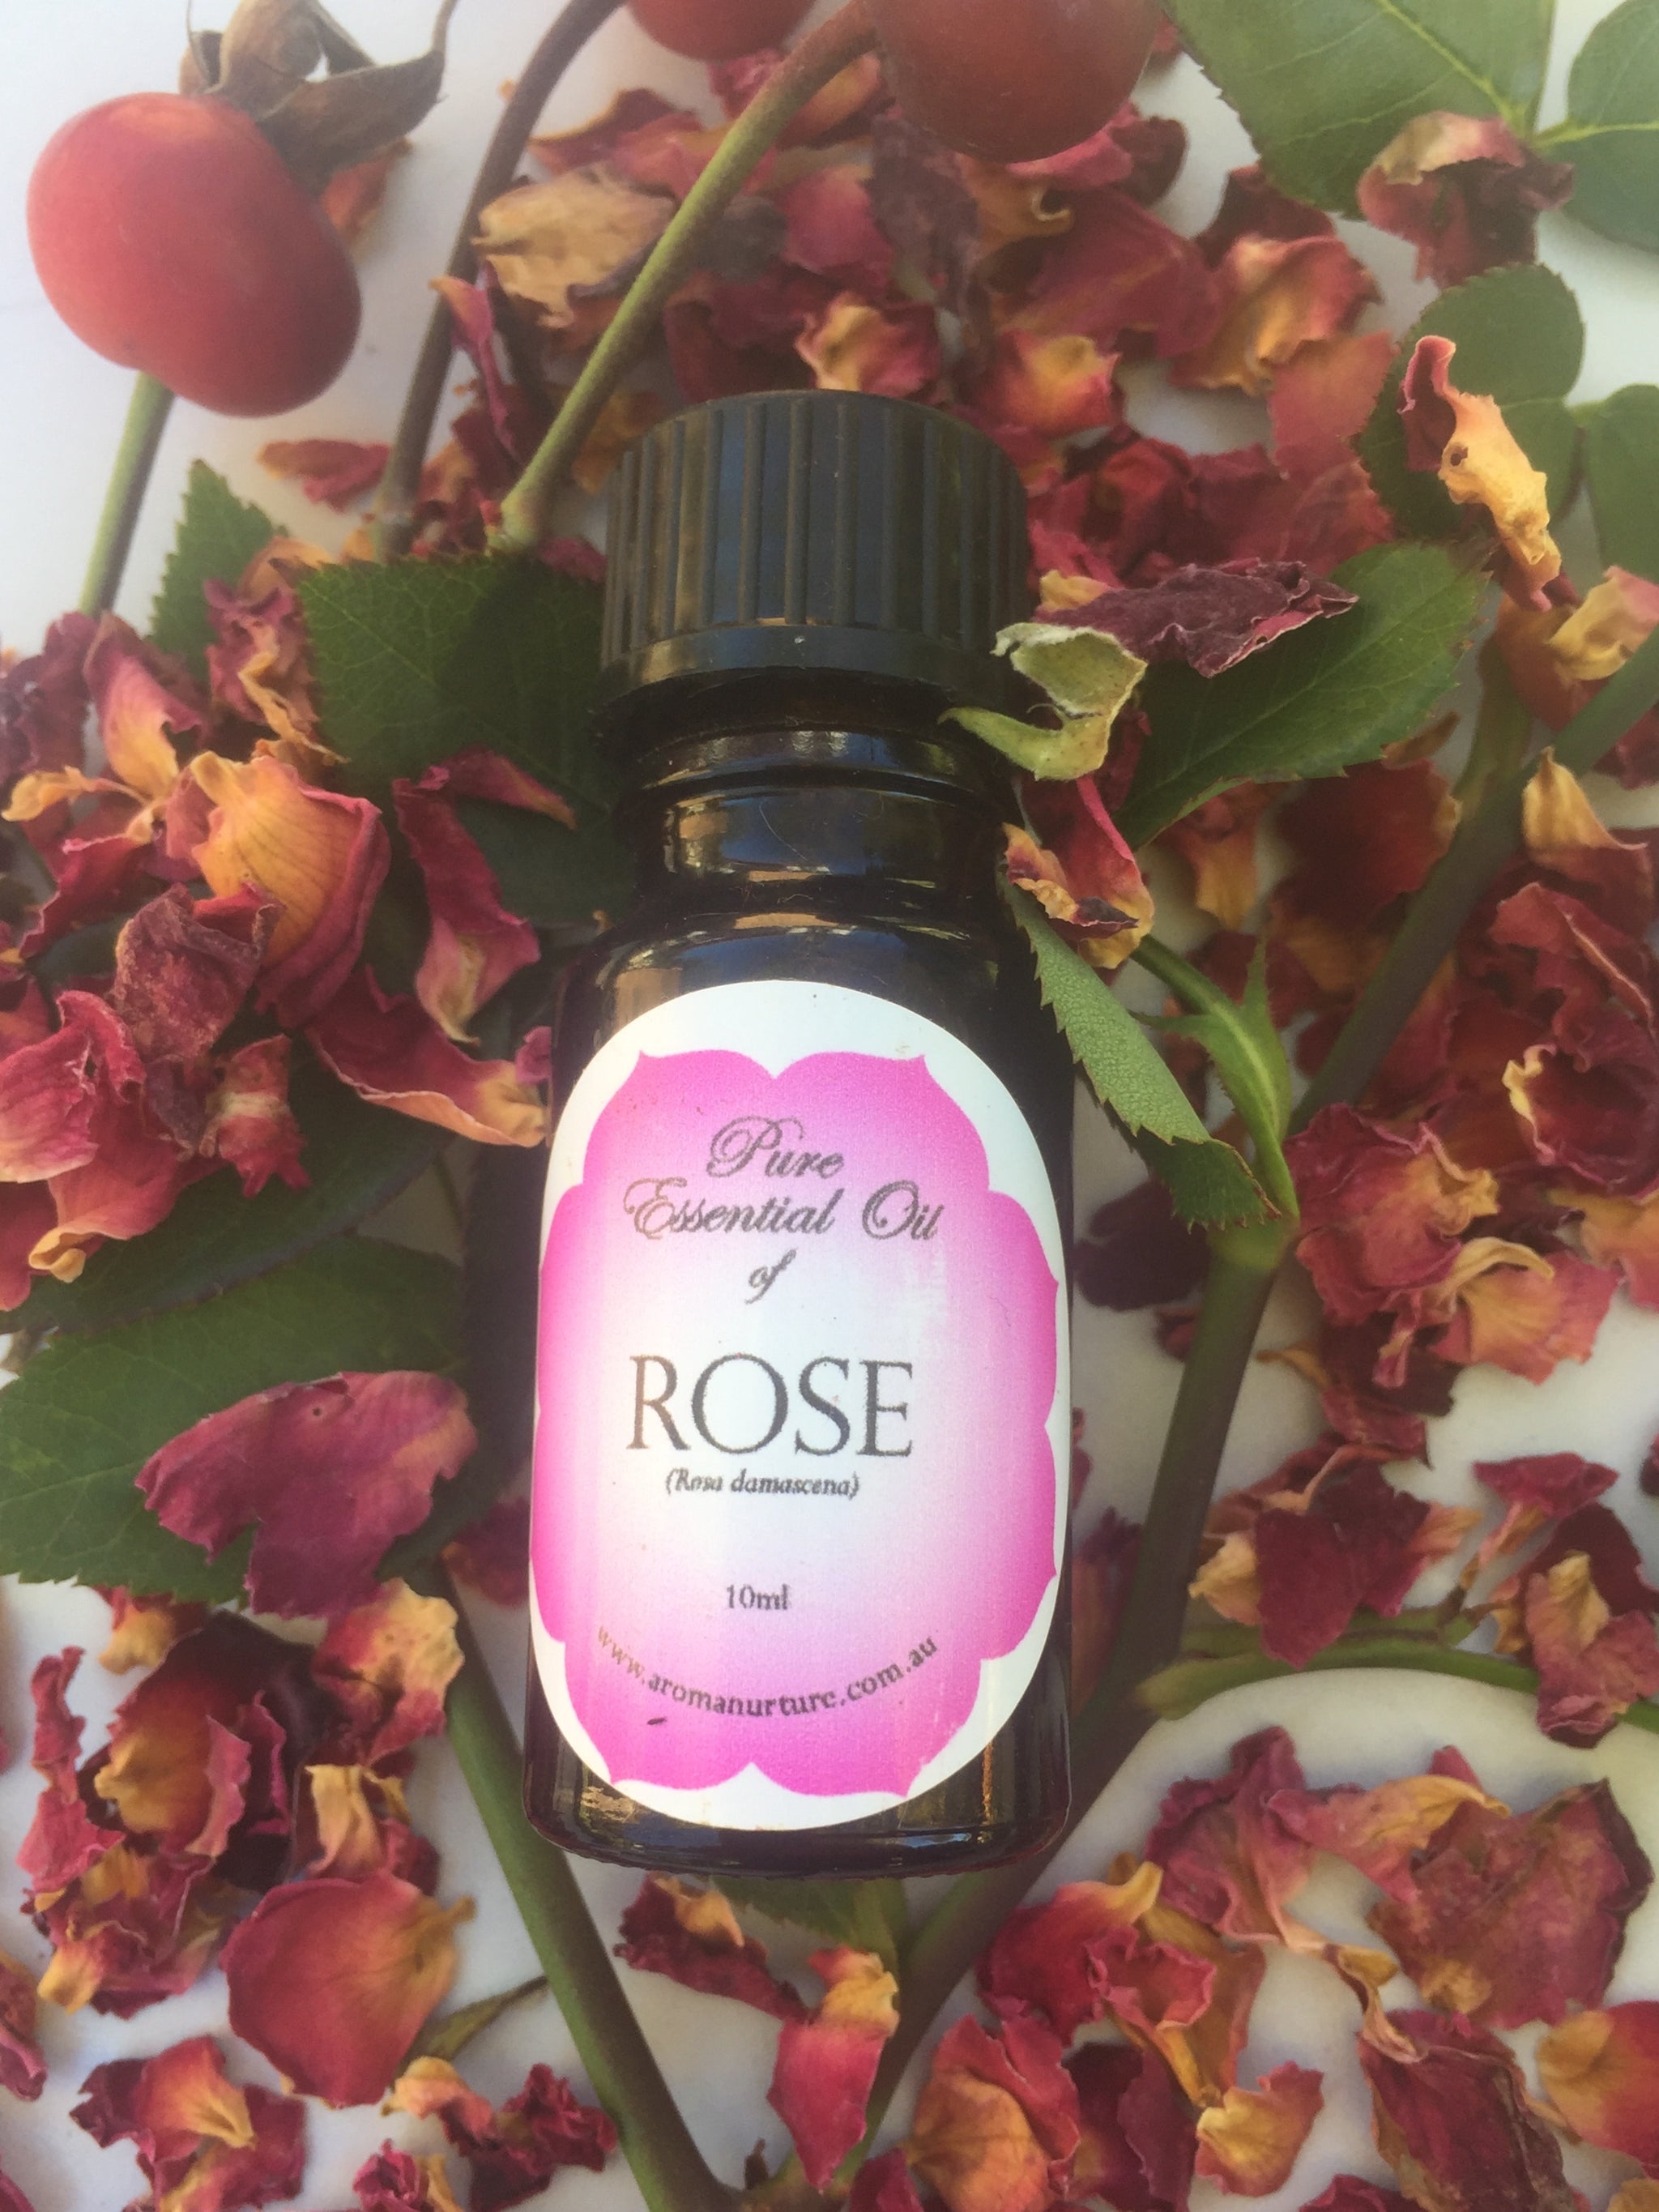 Pure Essential Oil of Rose 3% in Jojoba Oil.